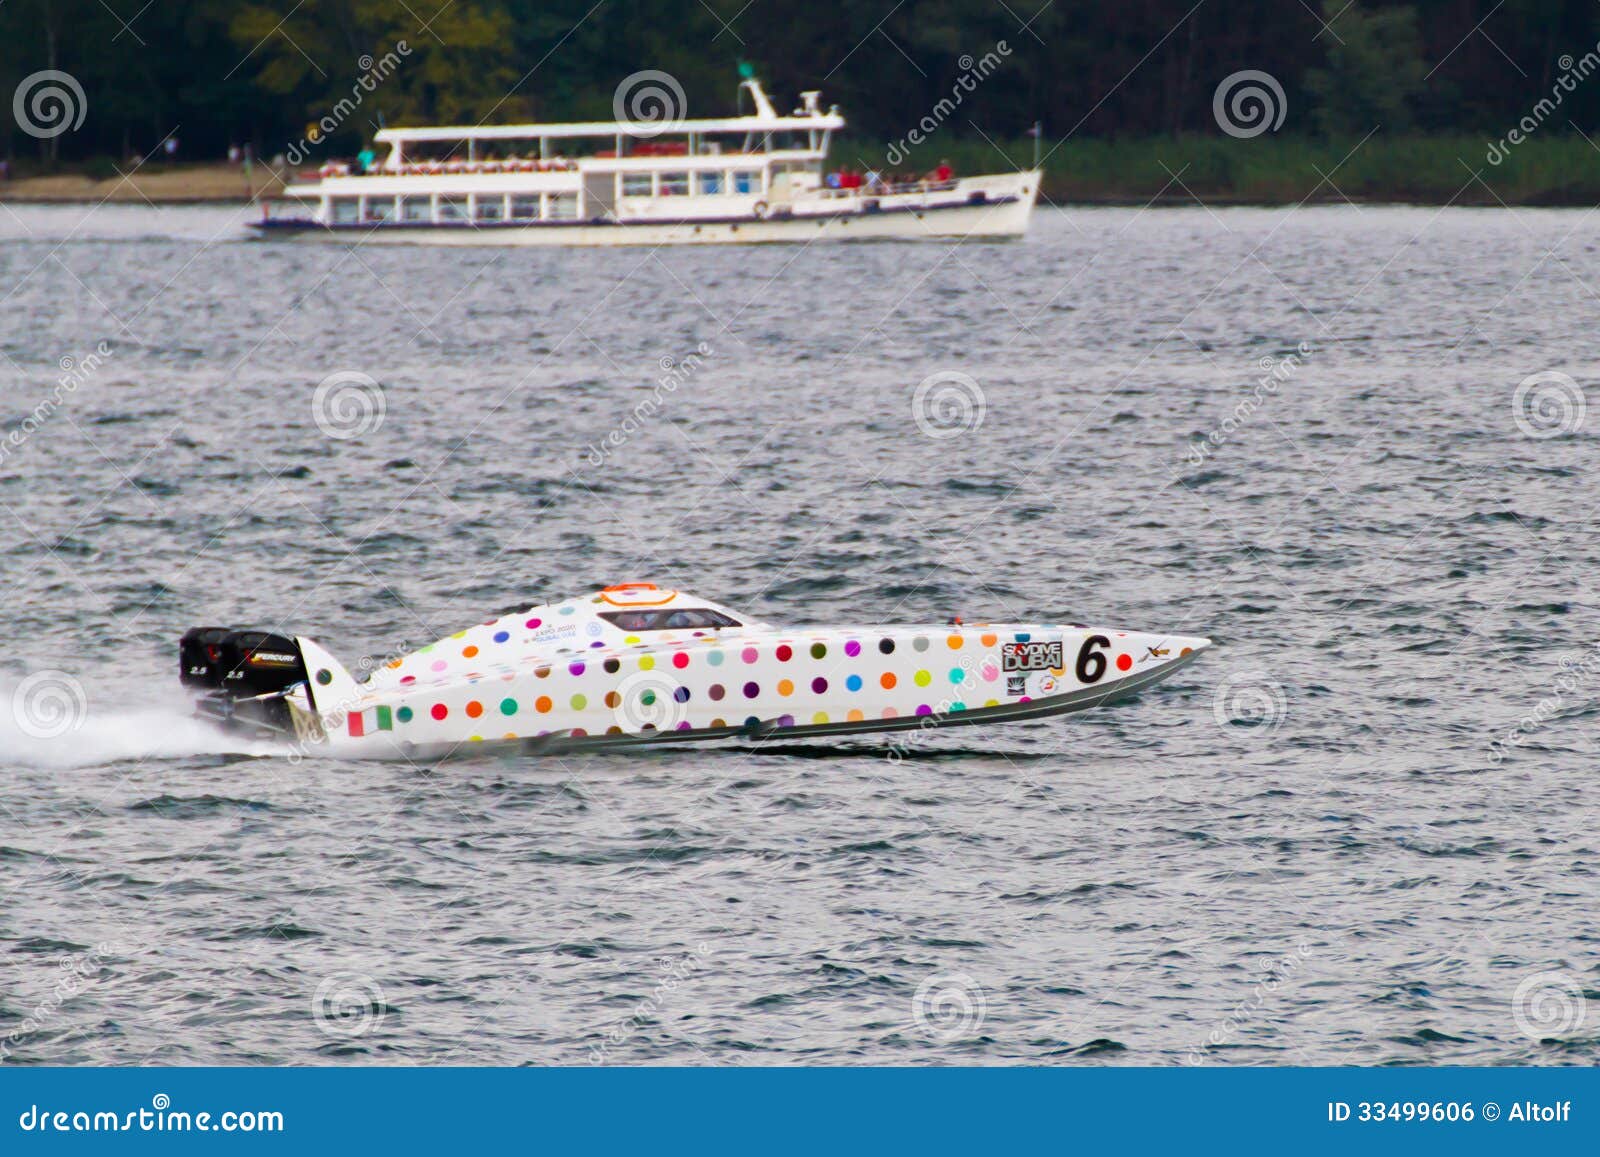 Powerboat Nicolini Offshore - Team 6 Editorial Photo ...